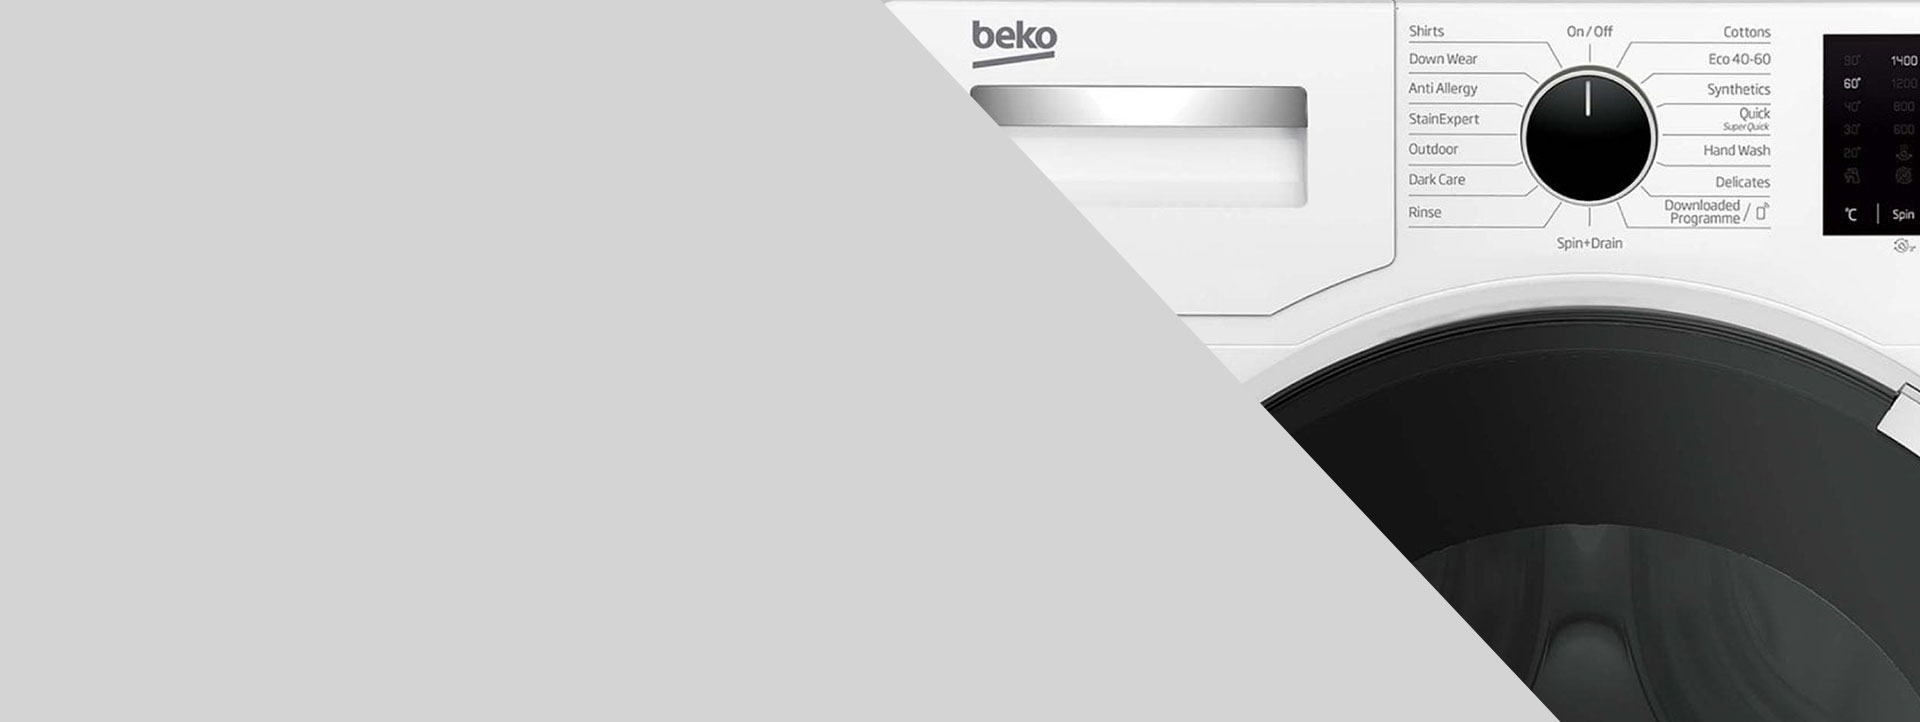 Beko domestic appliance repairs